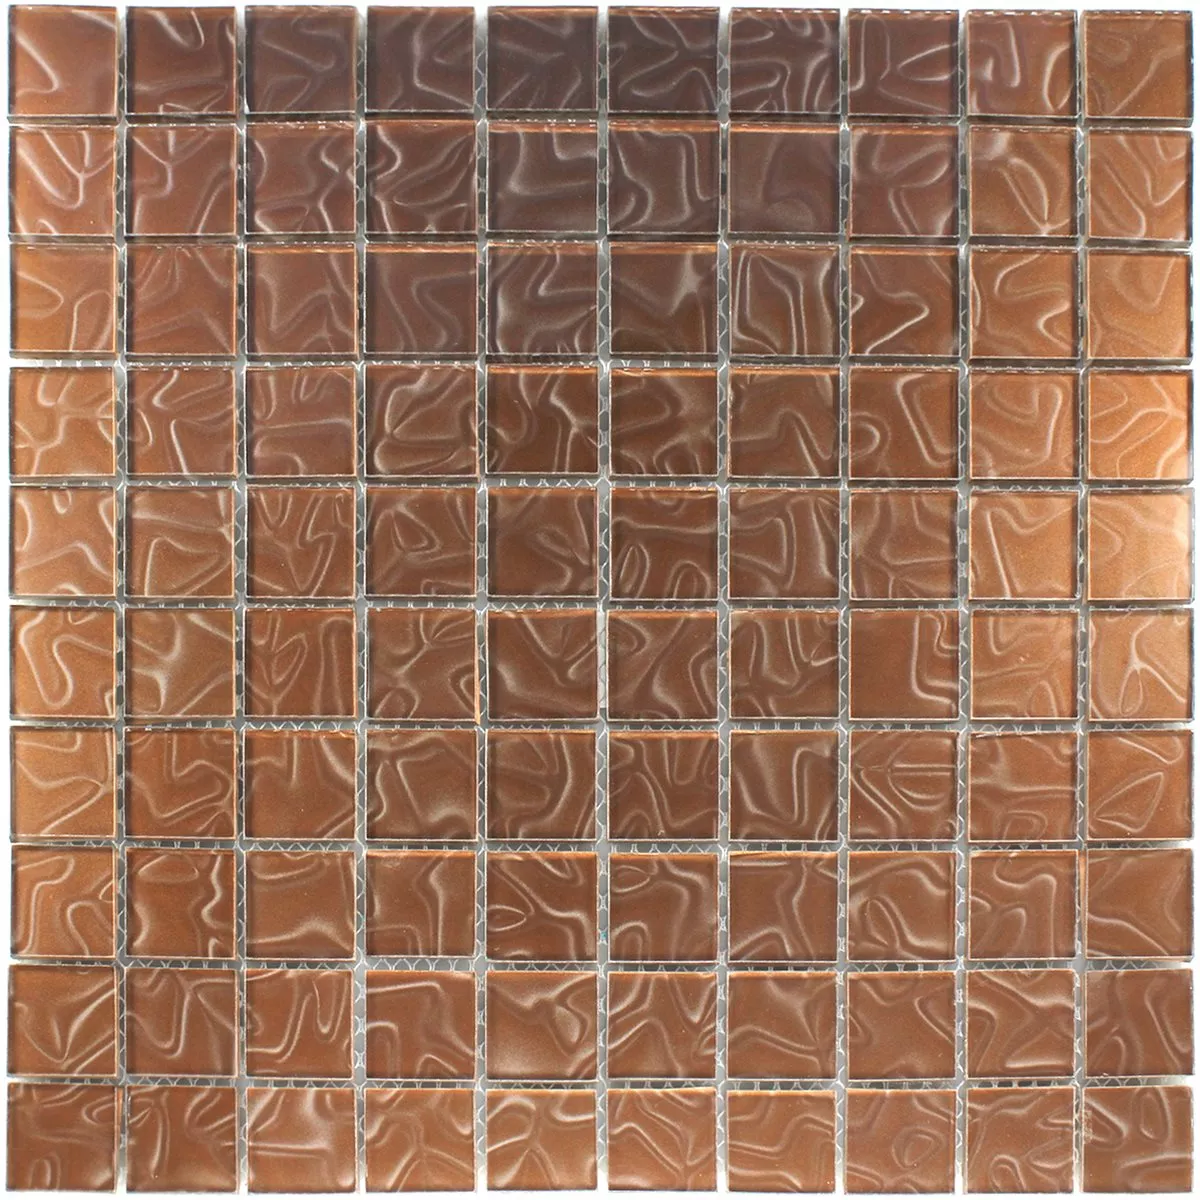 Mozaik Pločice Staklo Calypso Smeđa